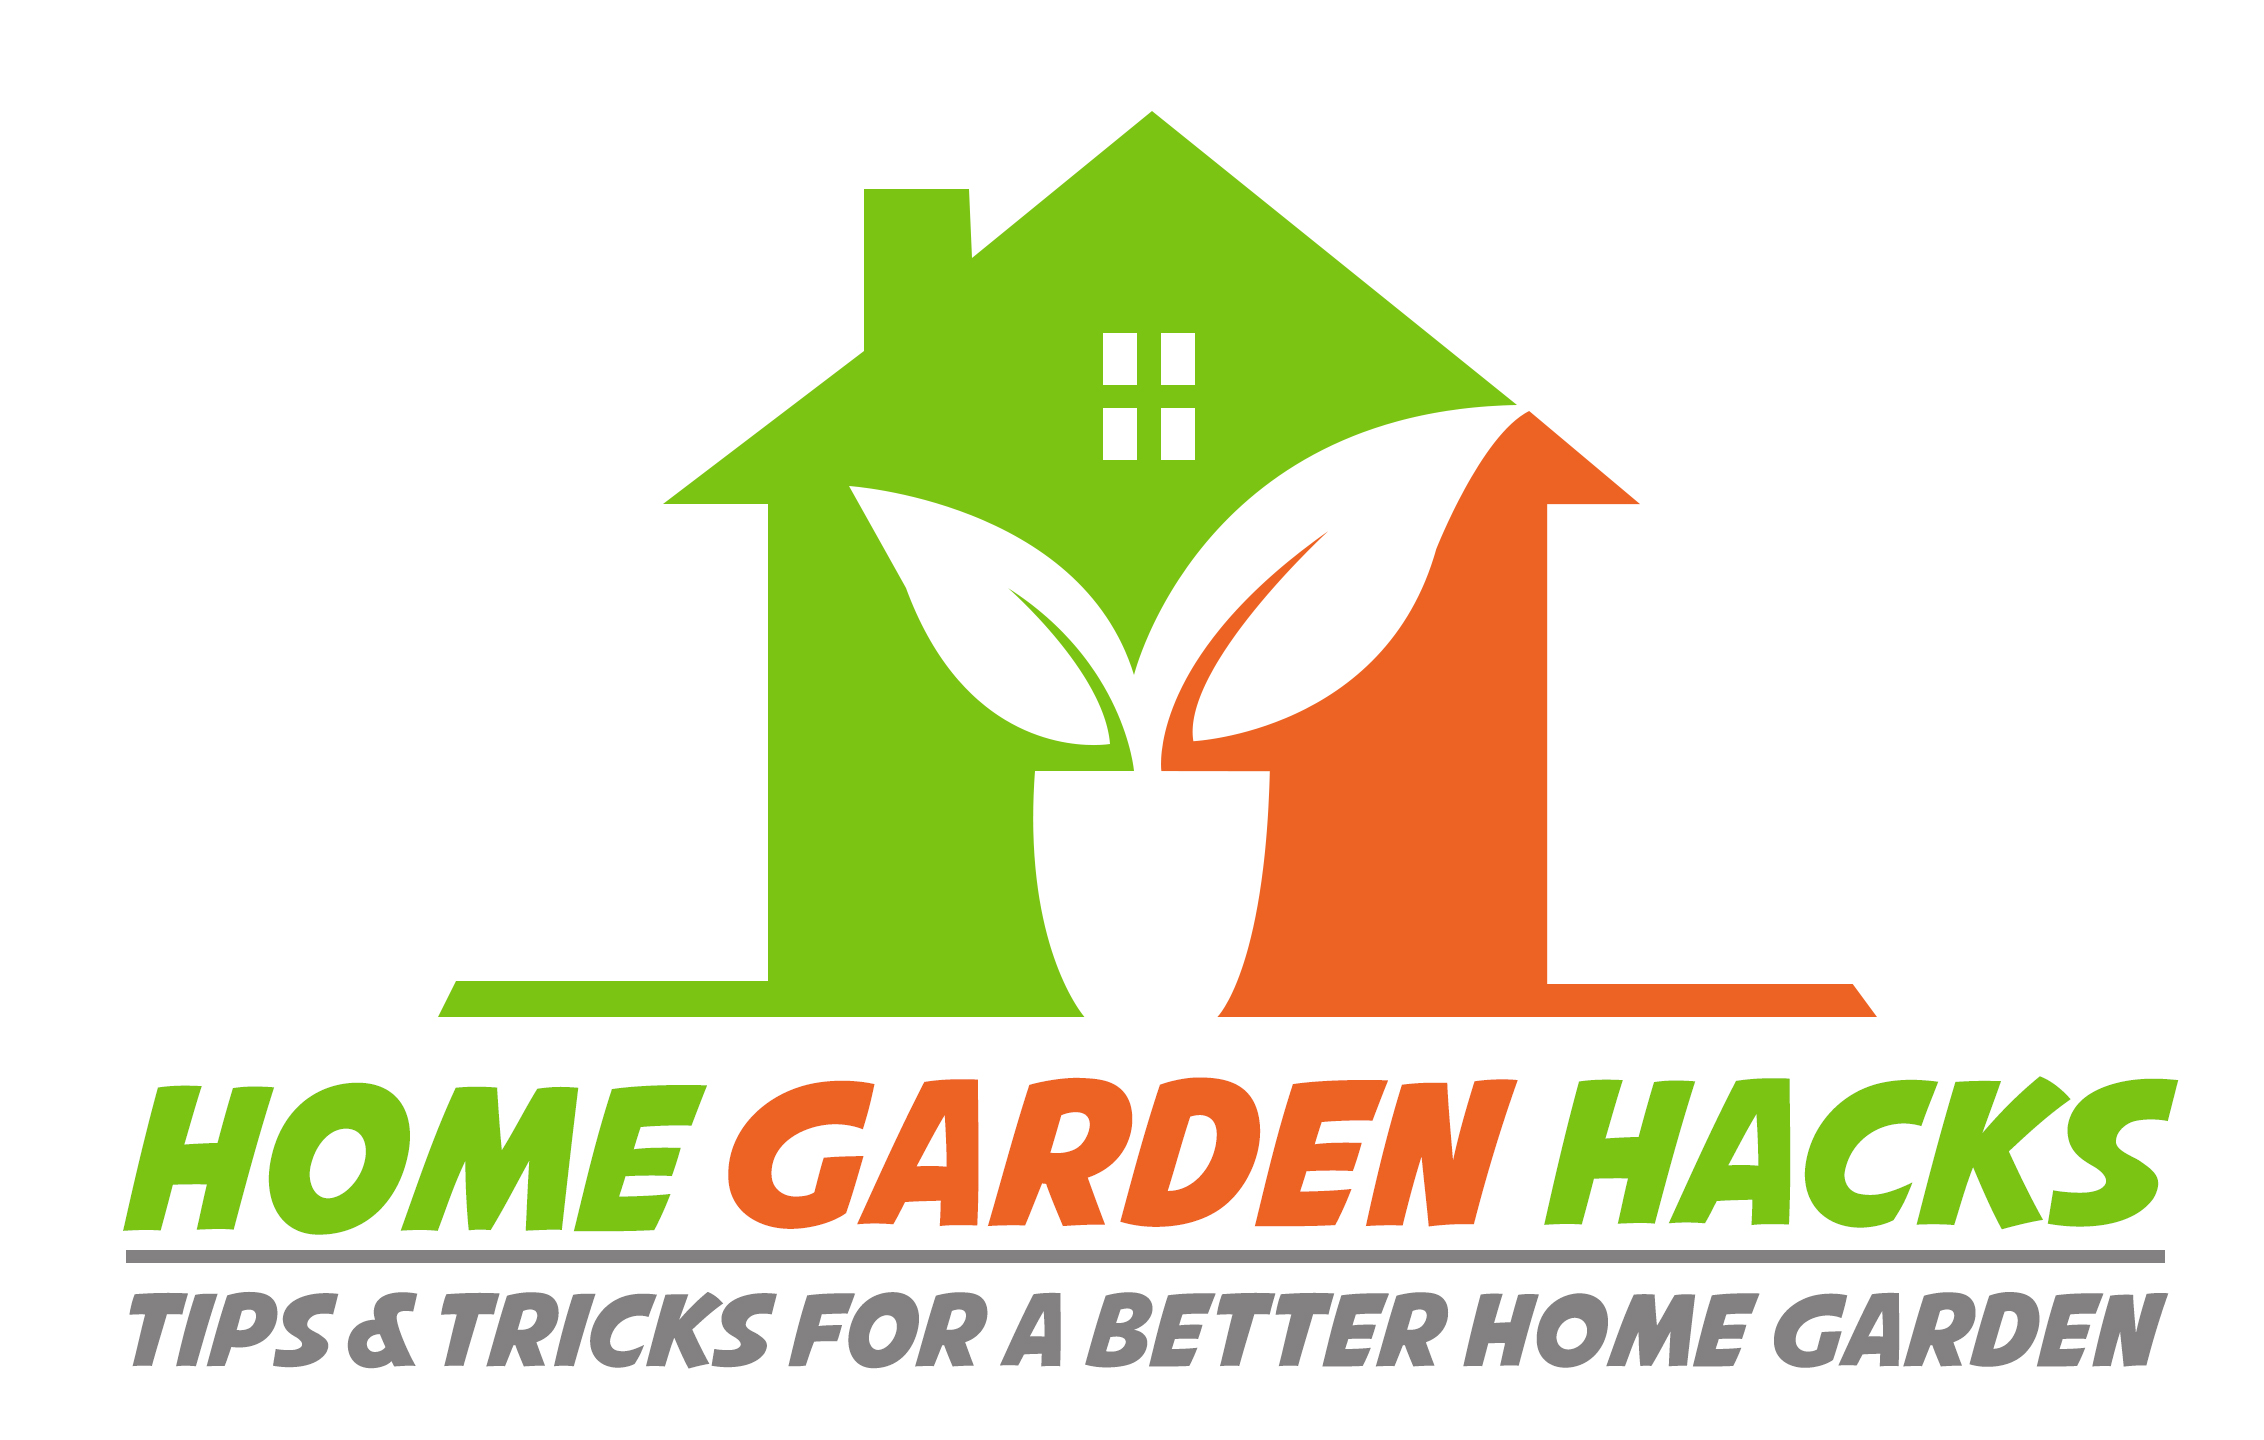 Welcome to Home Garden Hacks